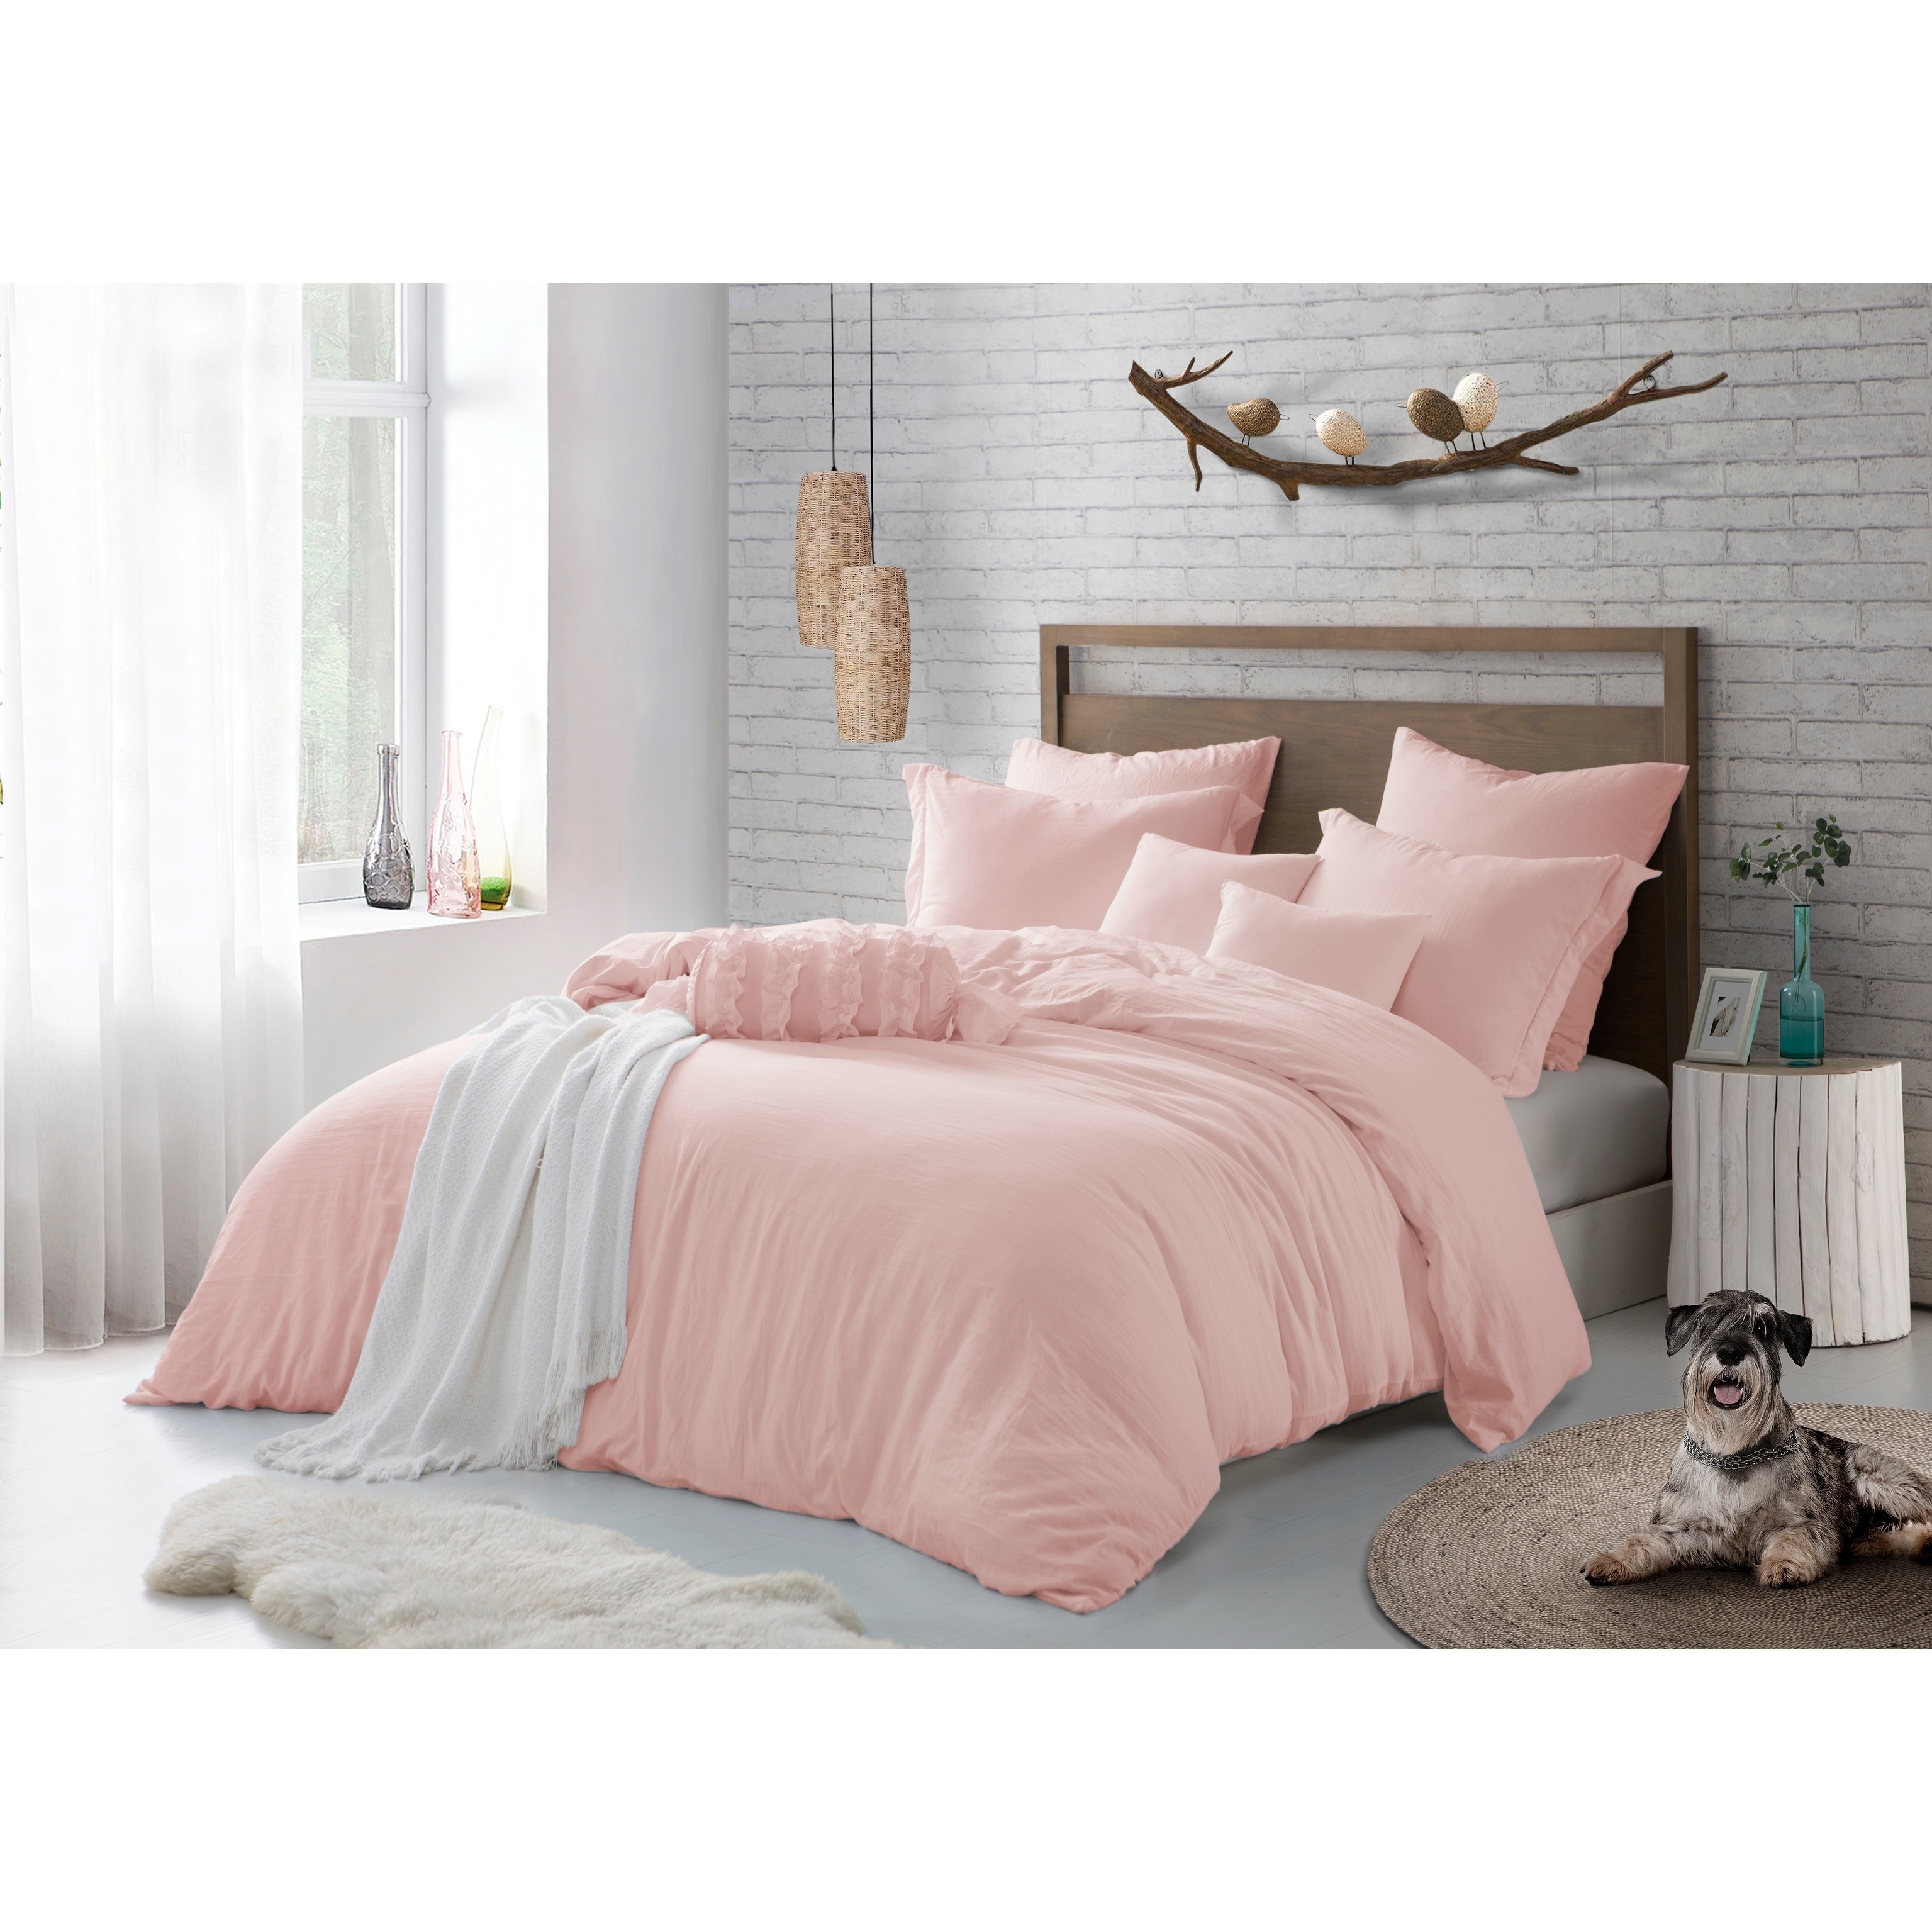 Calais Texture Stripe Crinkle Duvet Cover And Pillowcase Bedding Set Silver Pink